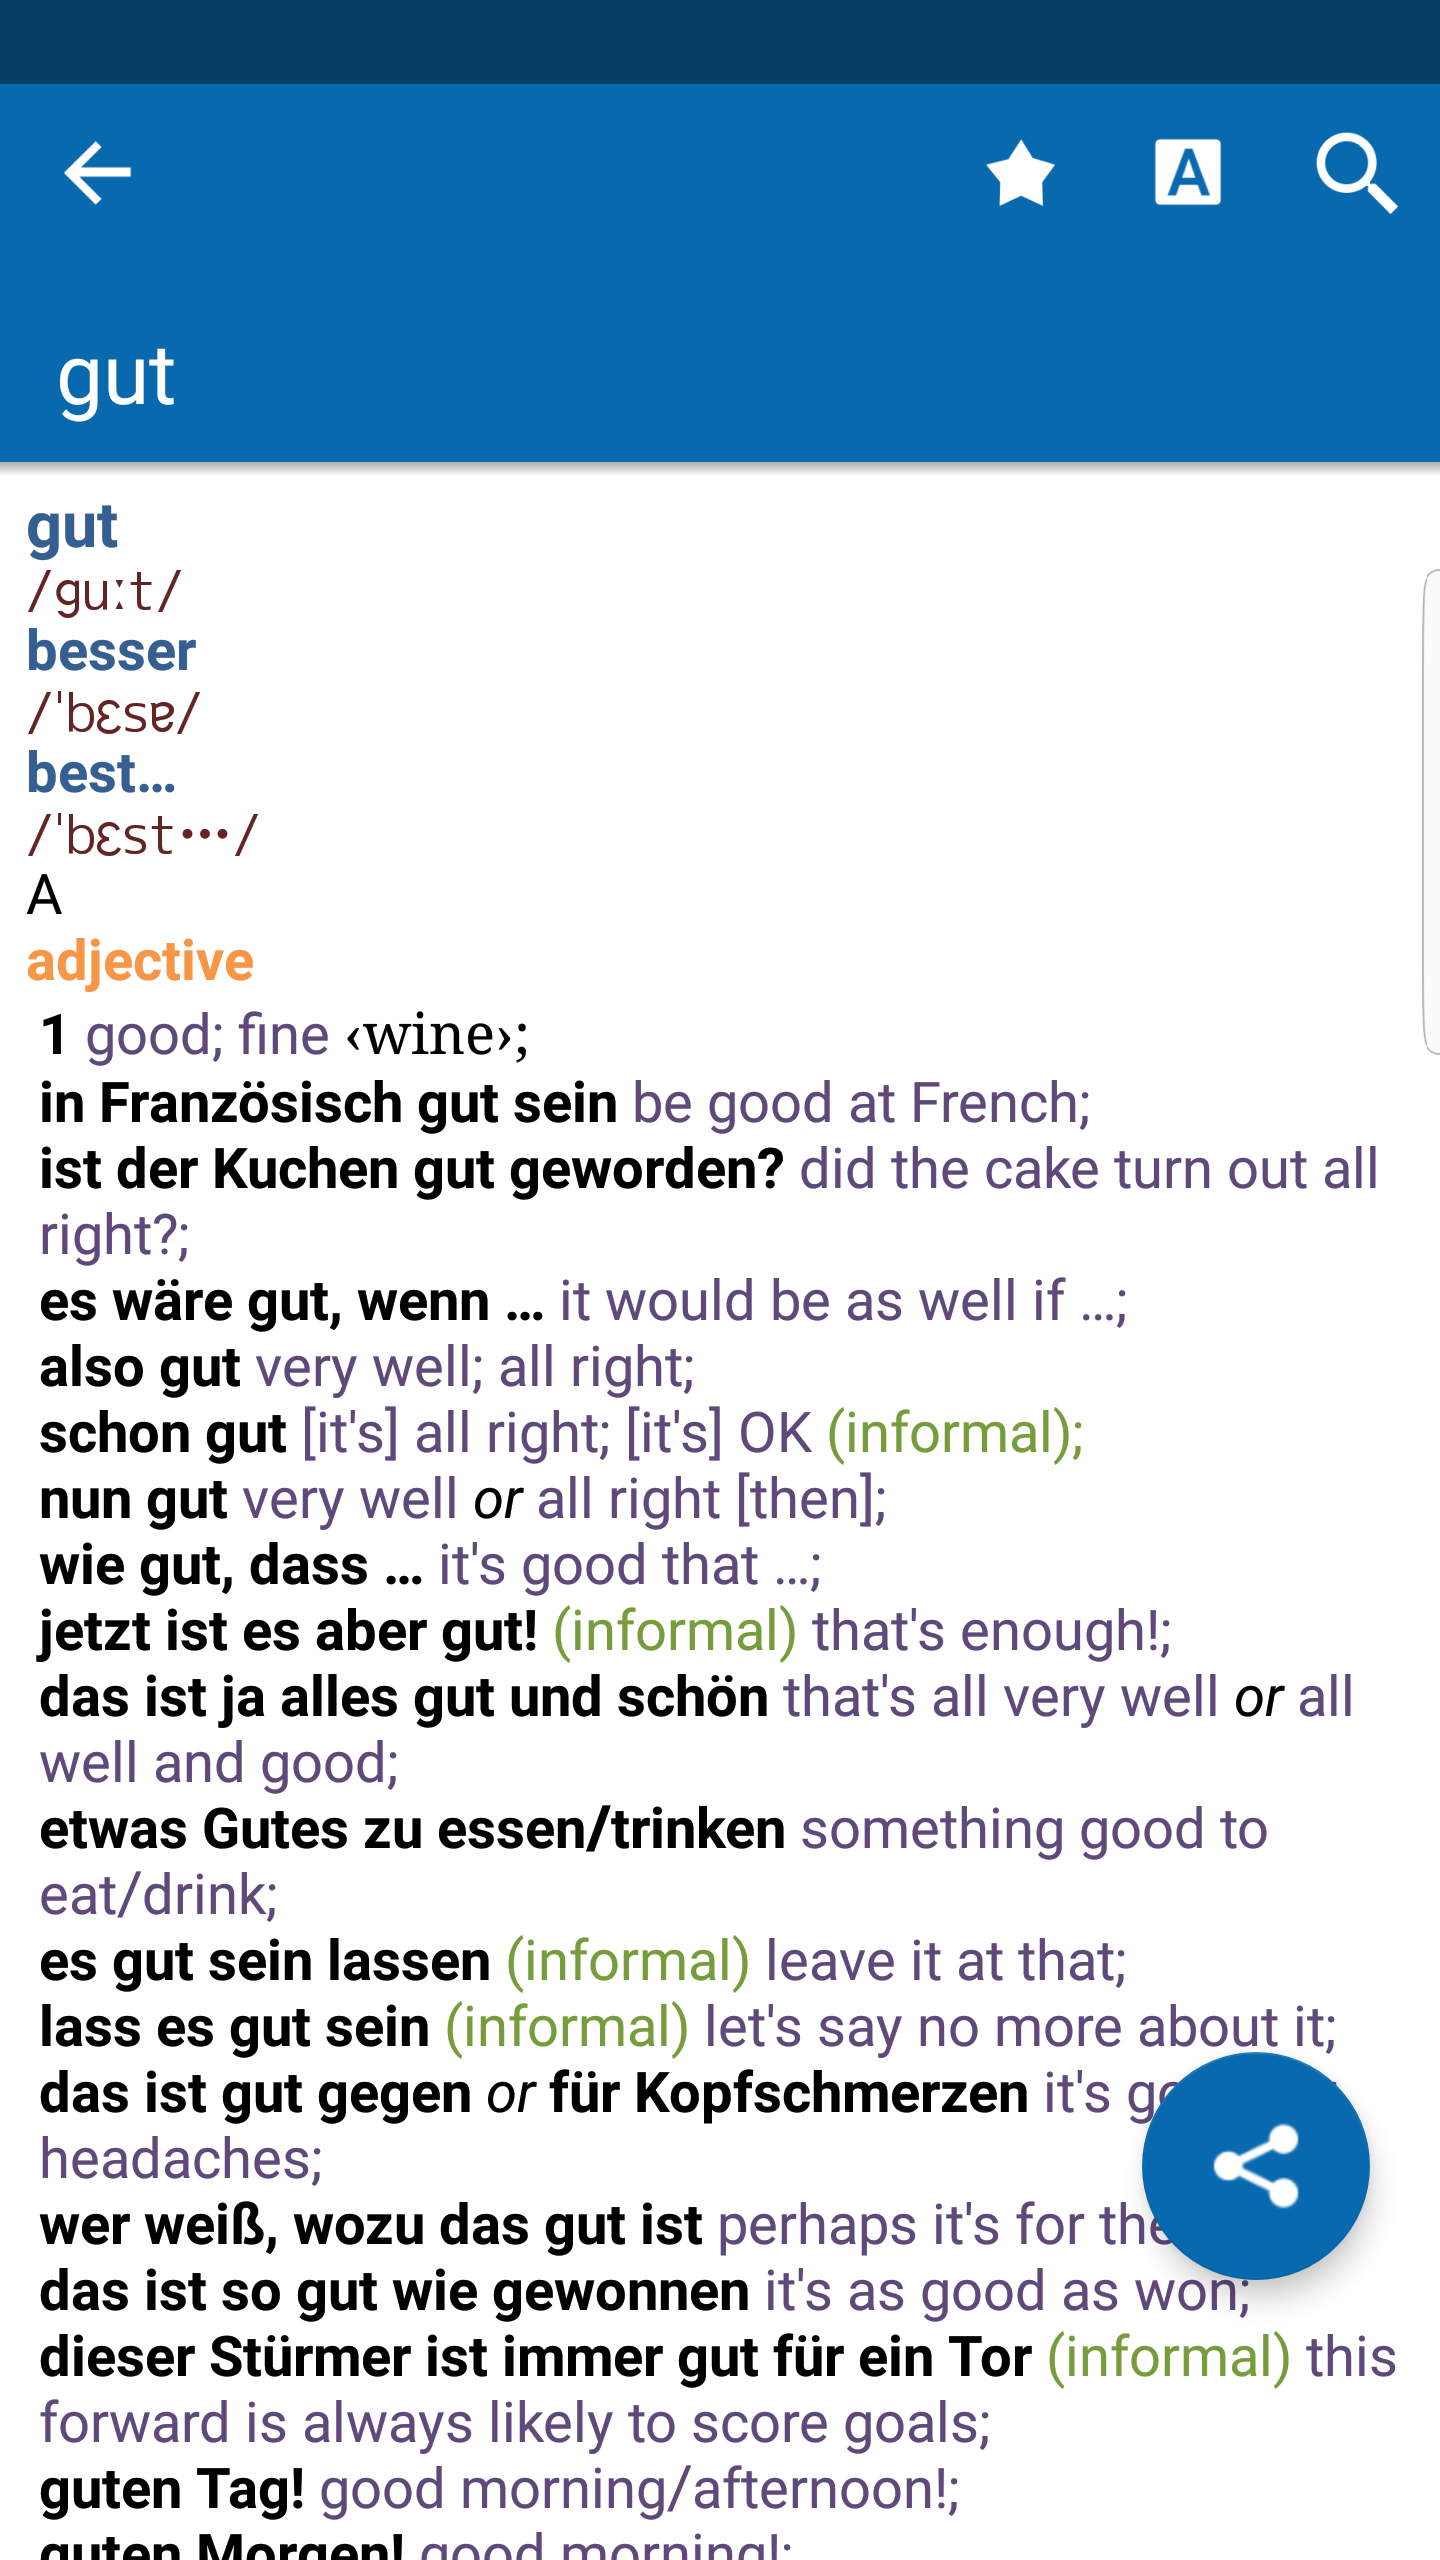 cc dictionary german english